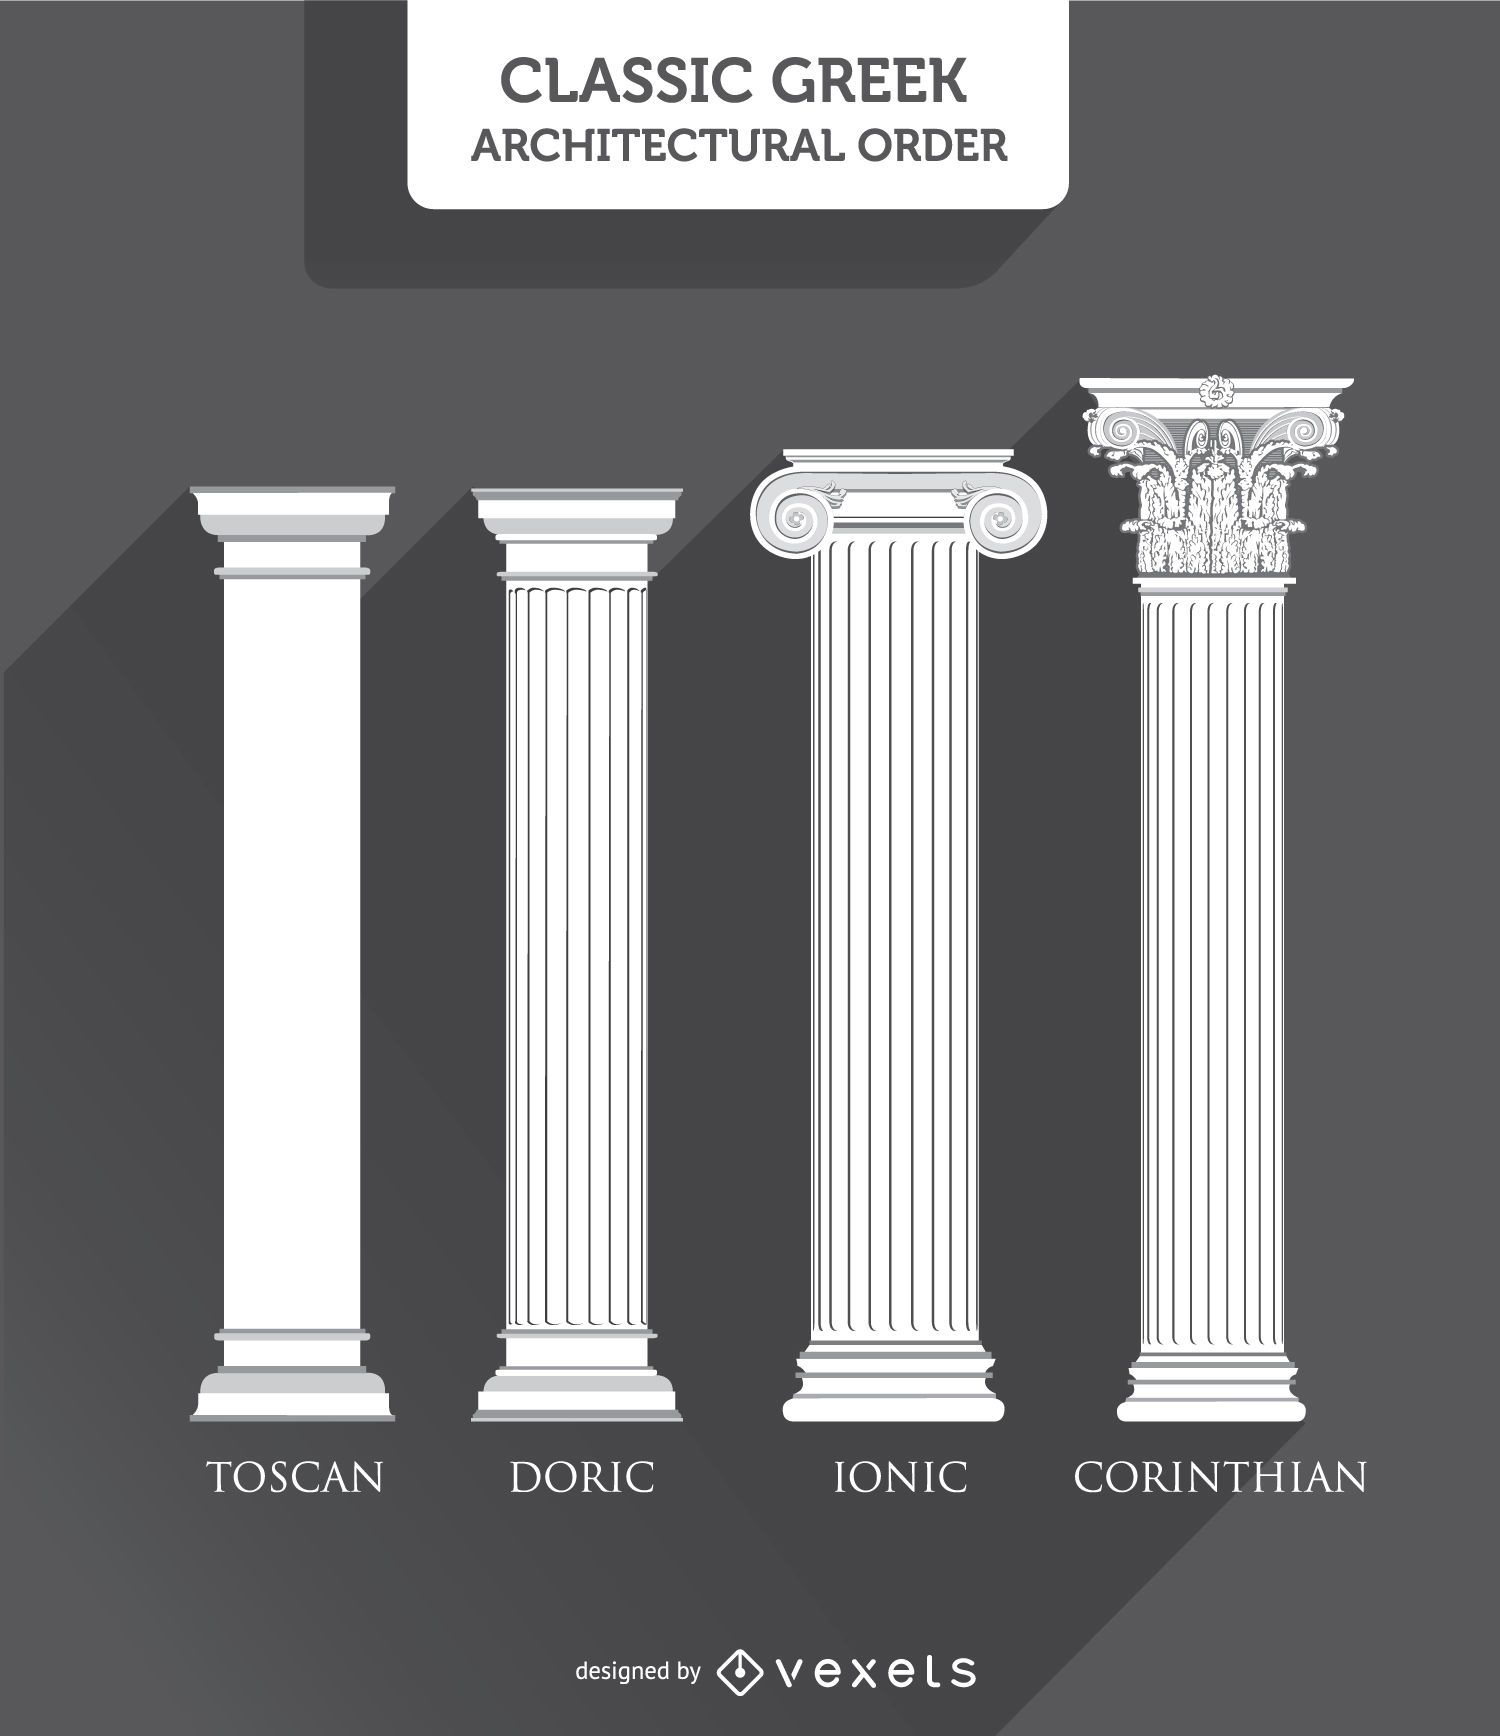 Greek Columns Styles: Toscan Doric Ionic and Corinthian